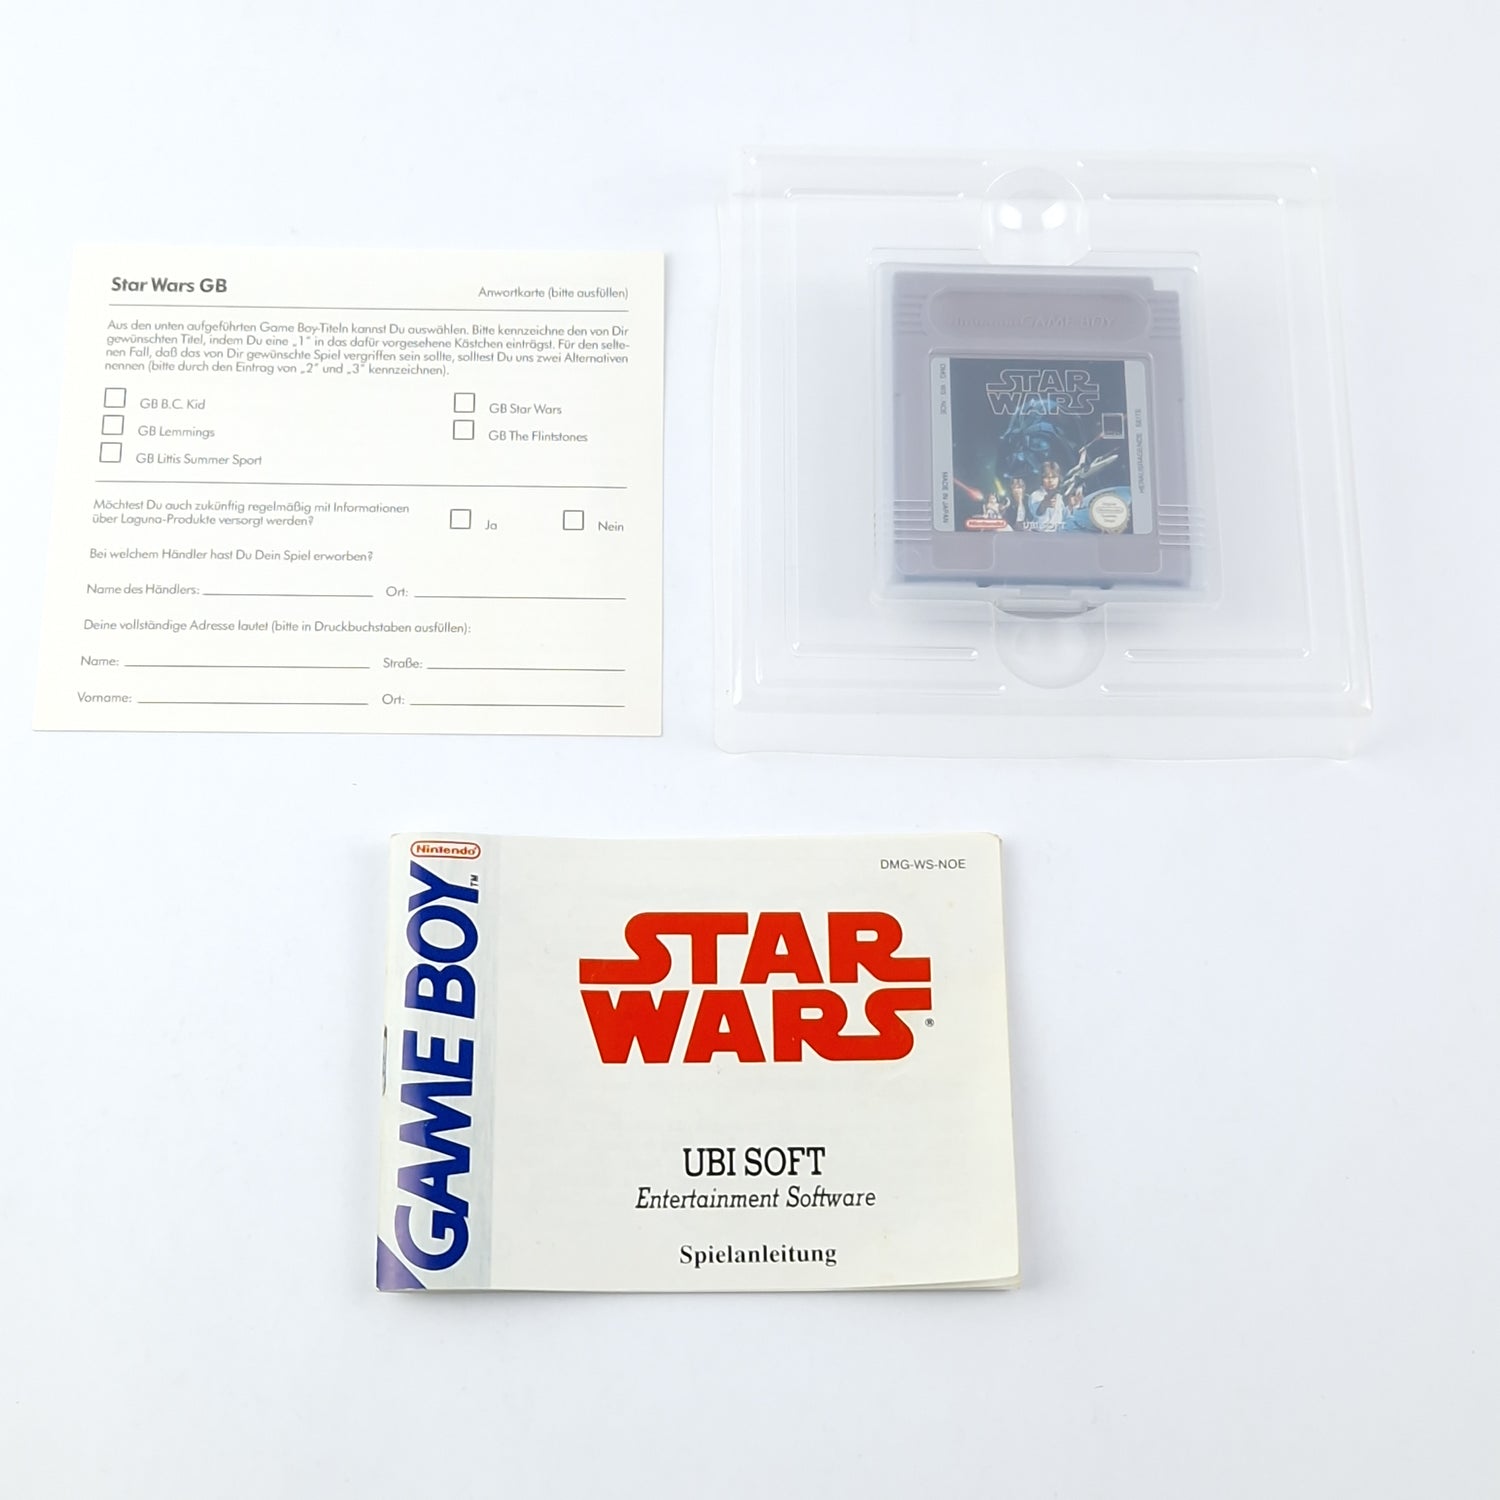 Nintendo Game Boy Classic Game: Star Wars - OVP Instructions Module | Gameboy NOE